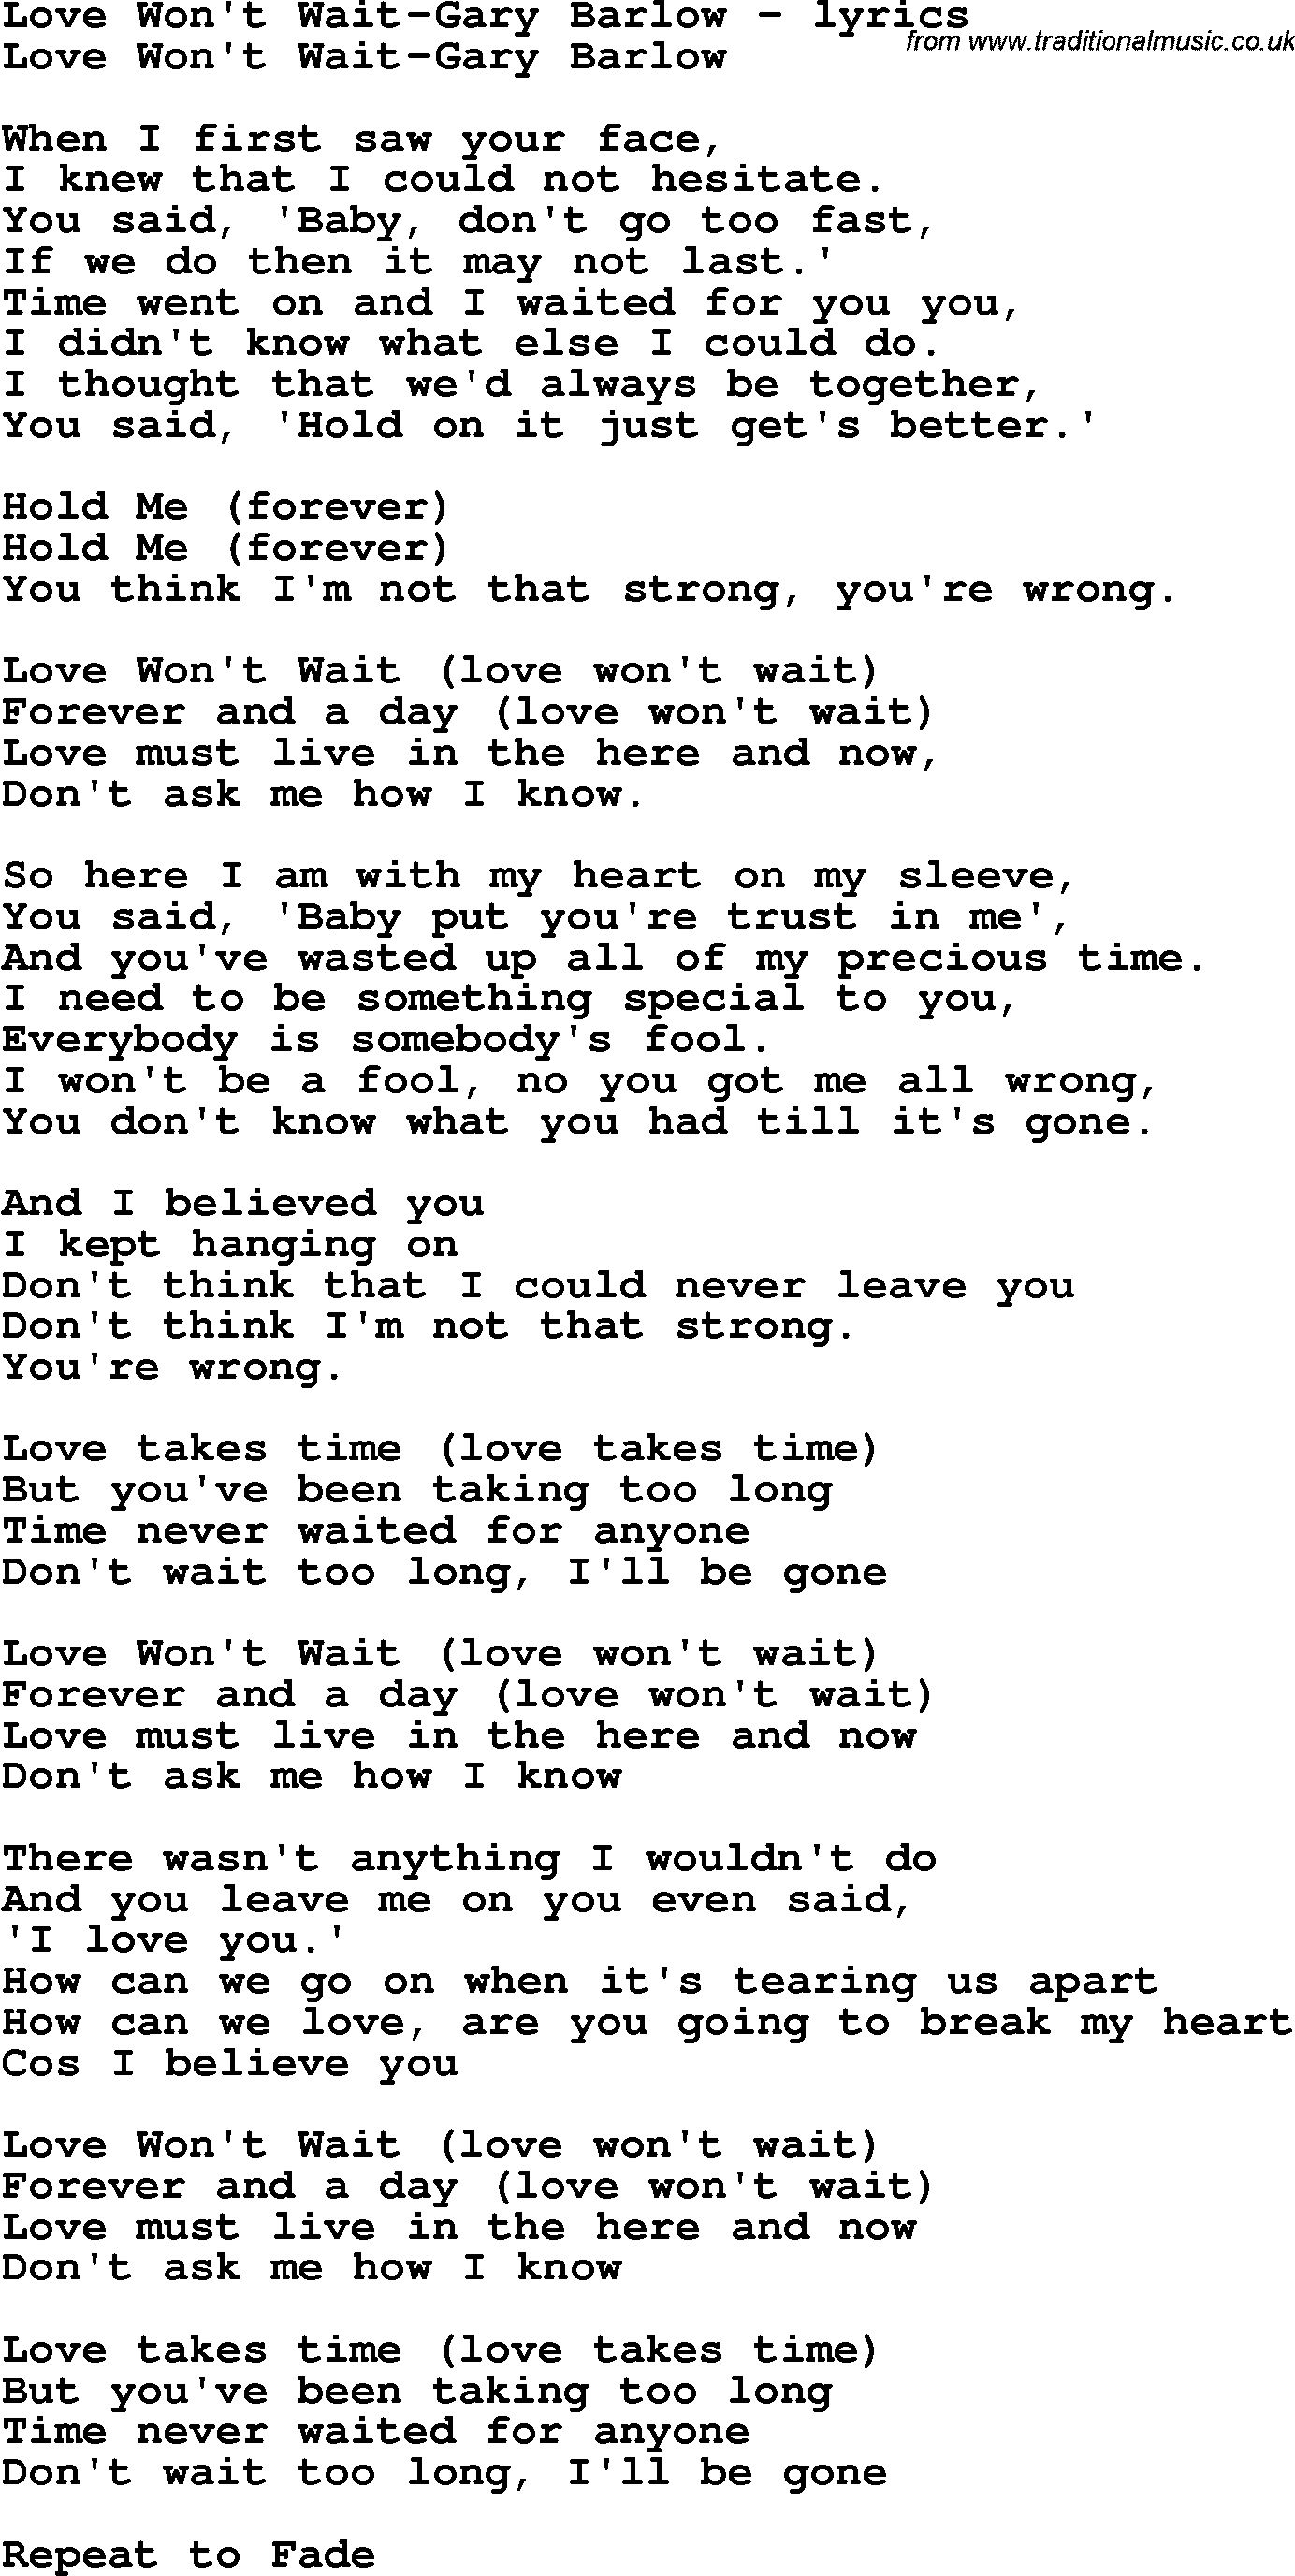 Love Song Lyrics for: Love Won't Wait-Gary Barlow